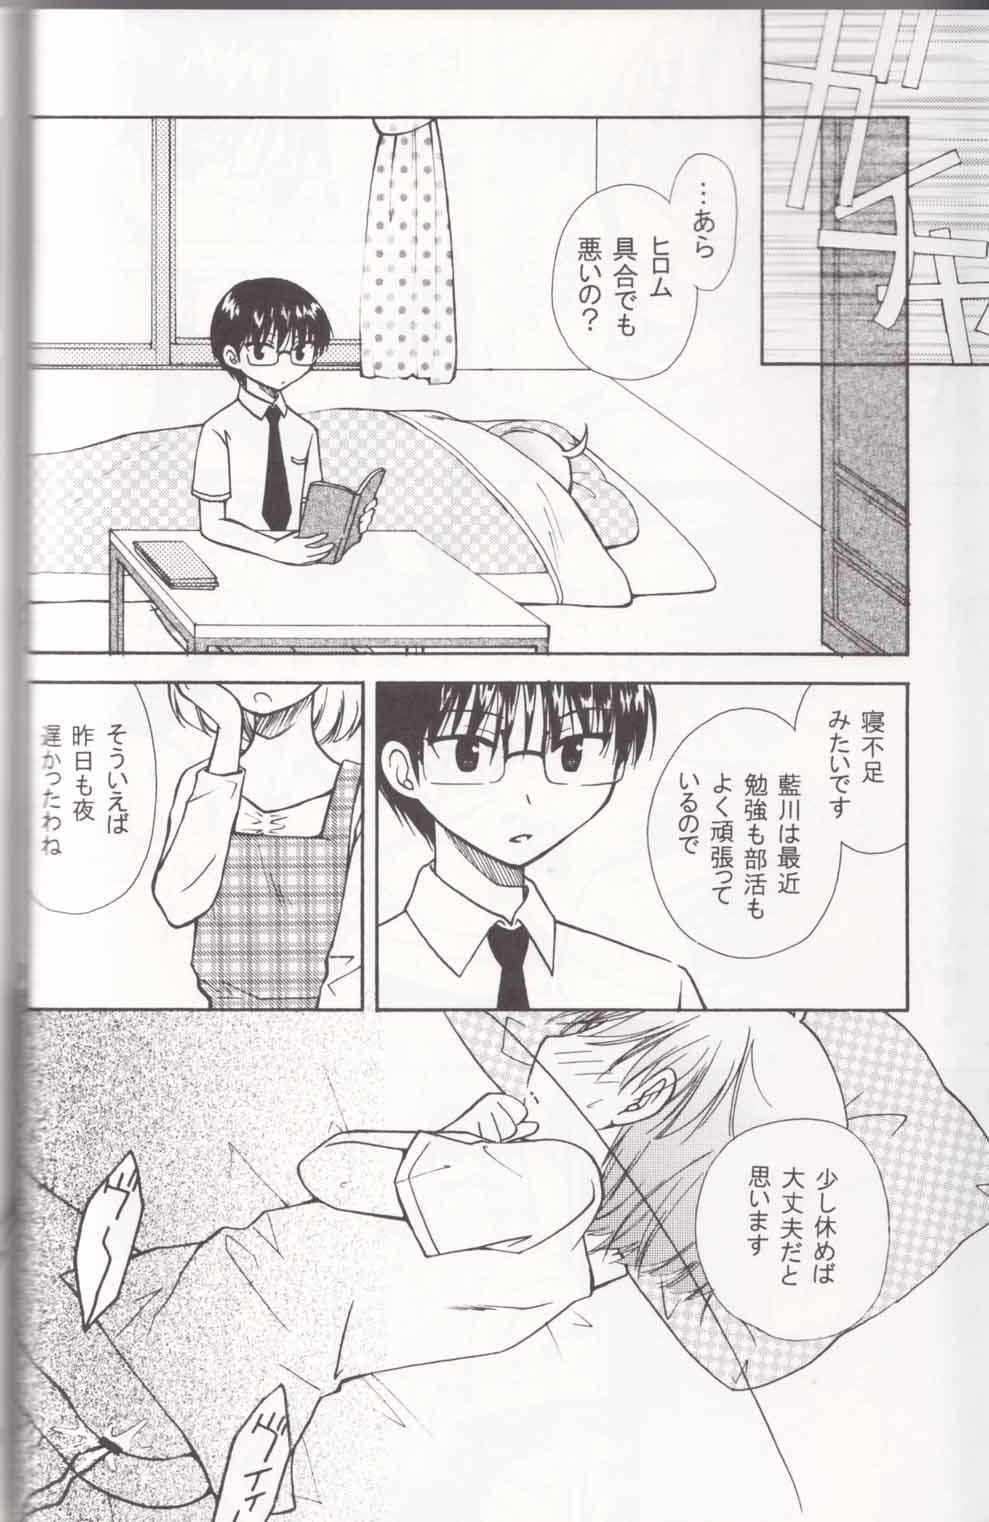 Webcamsex Boku no Sensei. - P2 lets play pingpong Seduction - Page 10